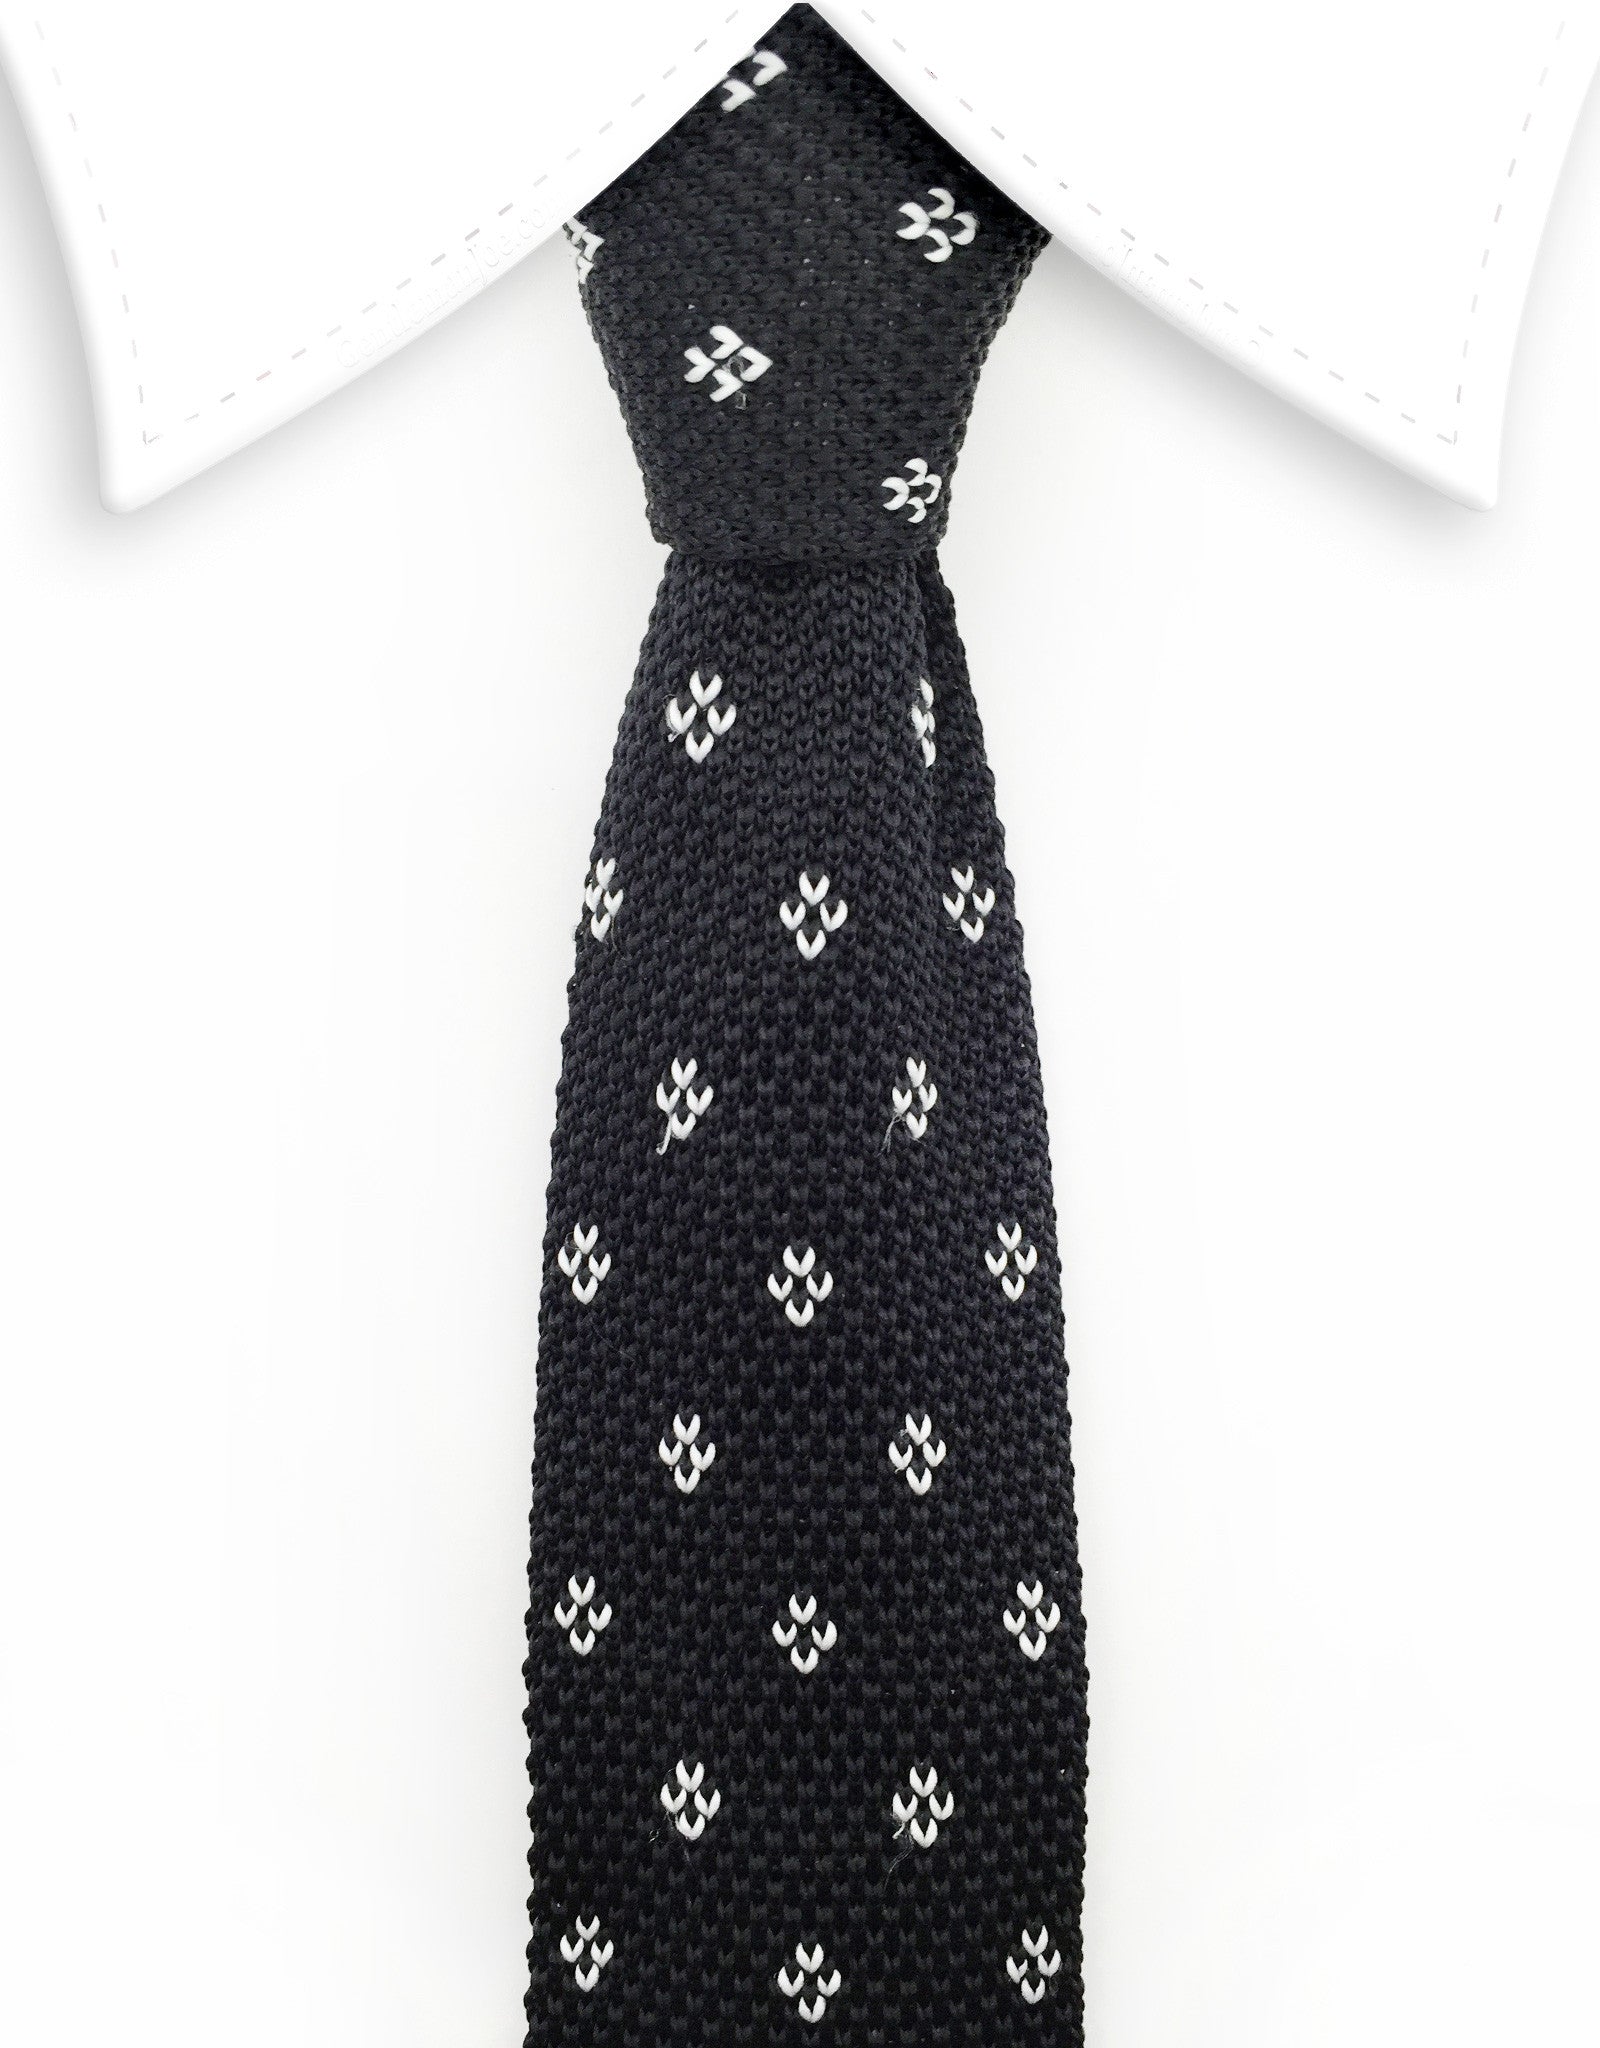 Black & White Knit Tie